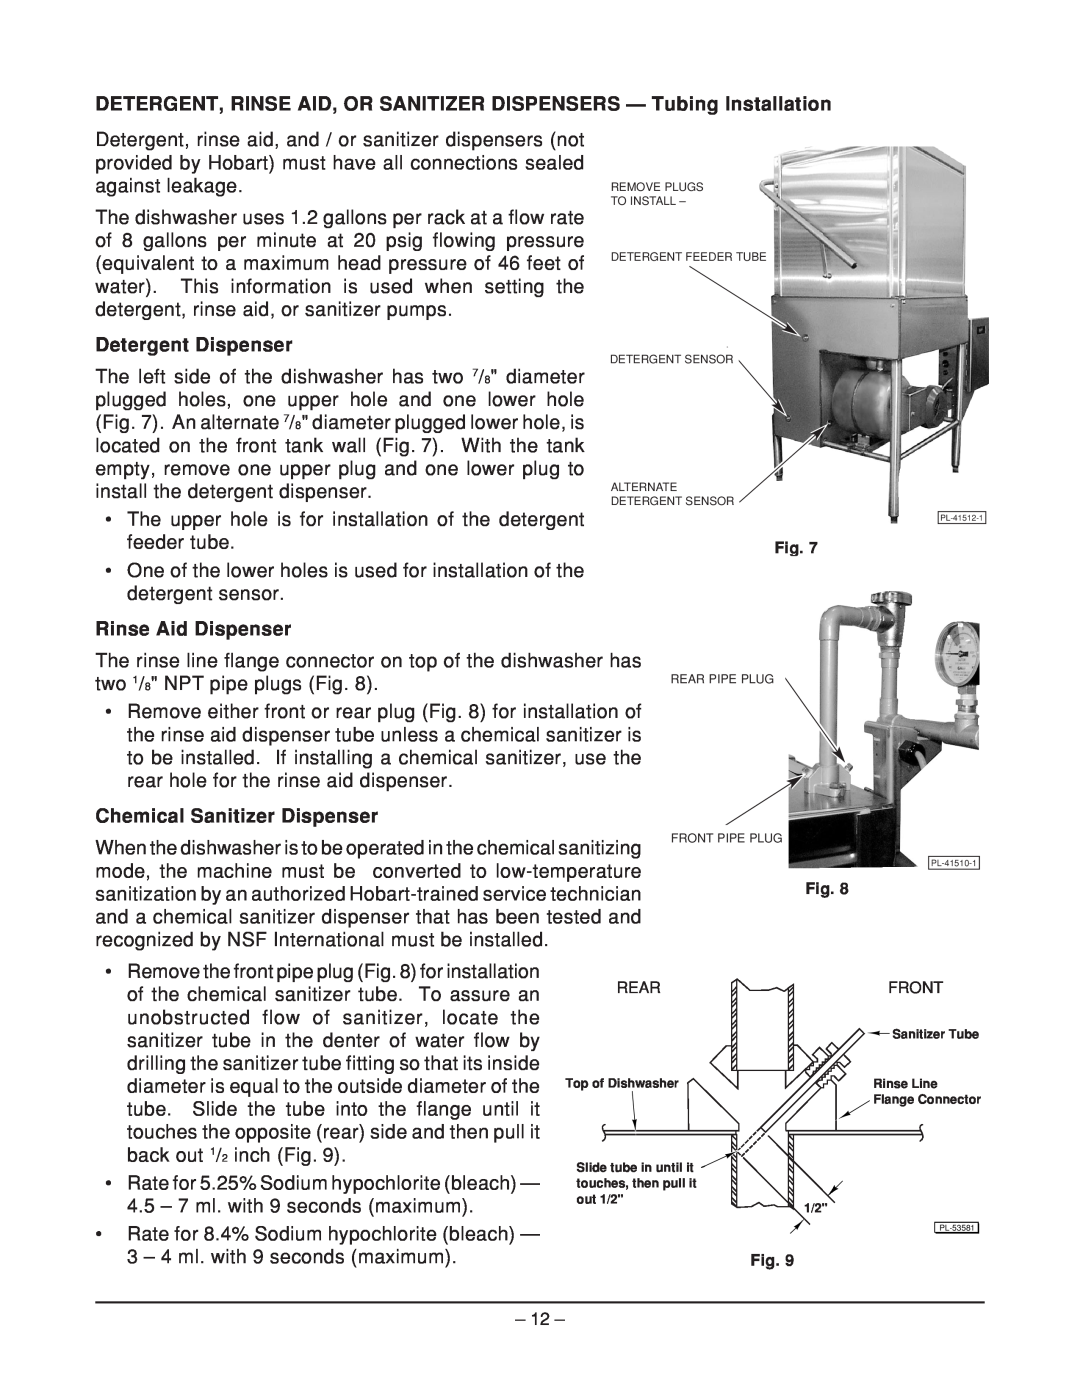 Hobart AM14 ML-110976, AM14C ML-110977 manual Detergent Dispenser, Rinse Aid Dispenser, Chemical Sanitizer Dispenser 